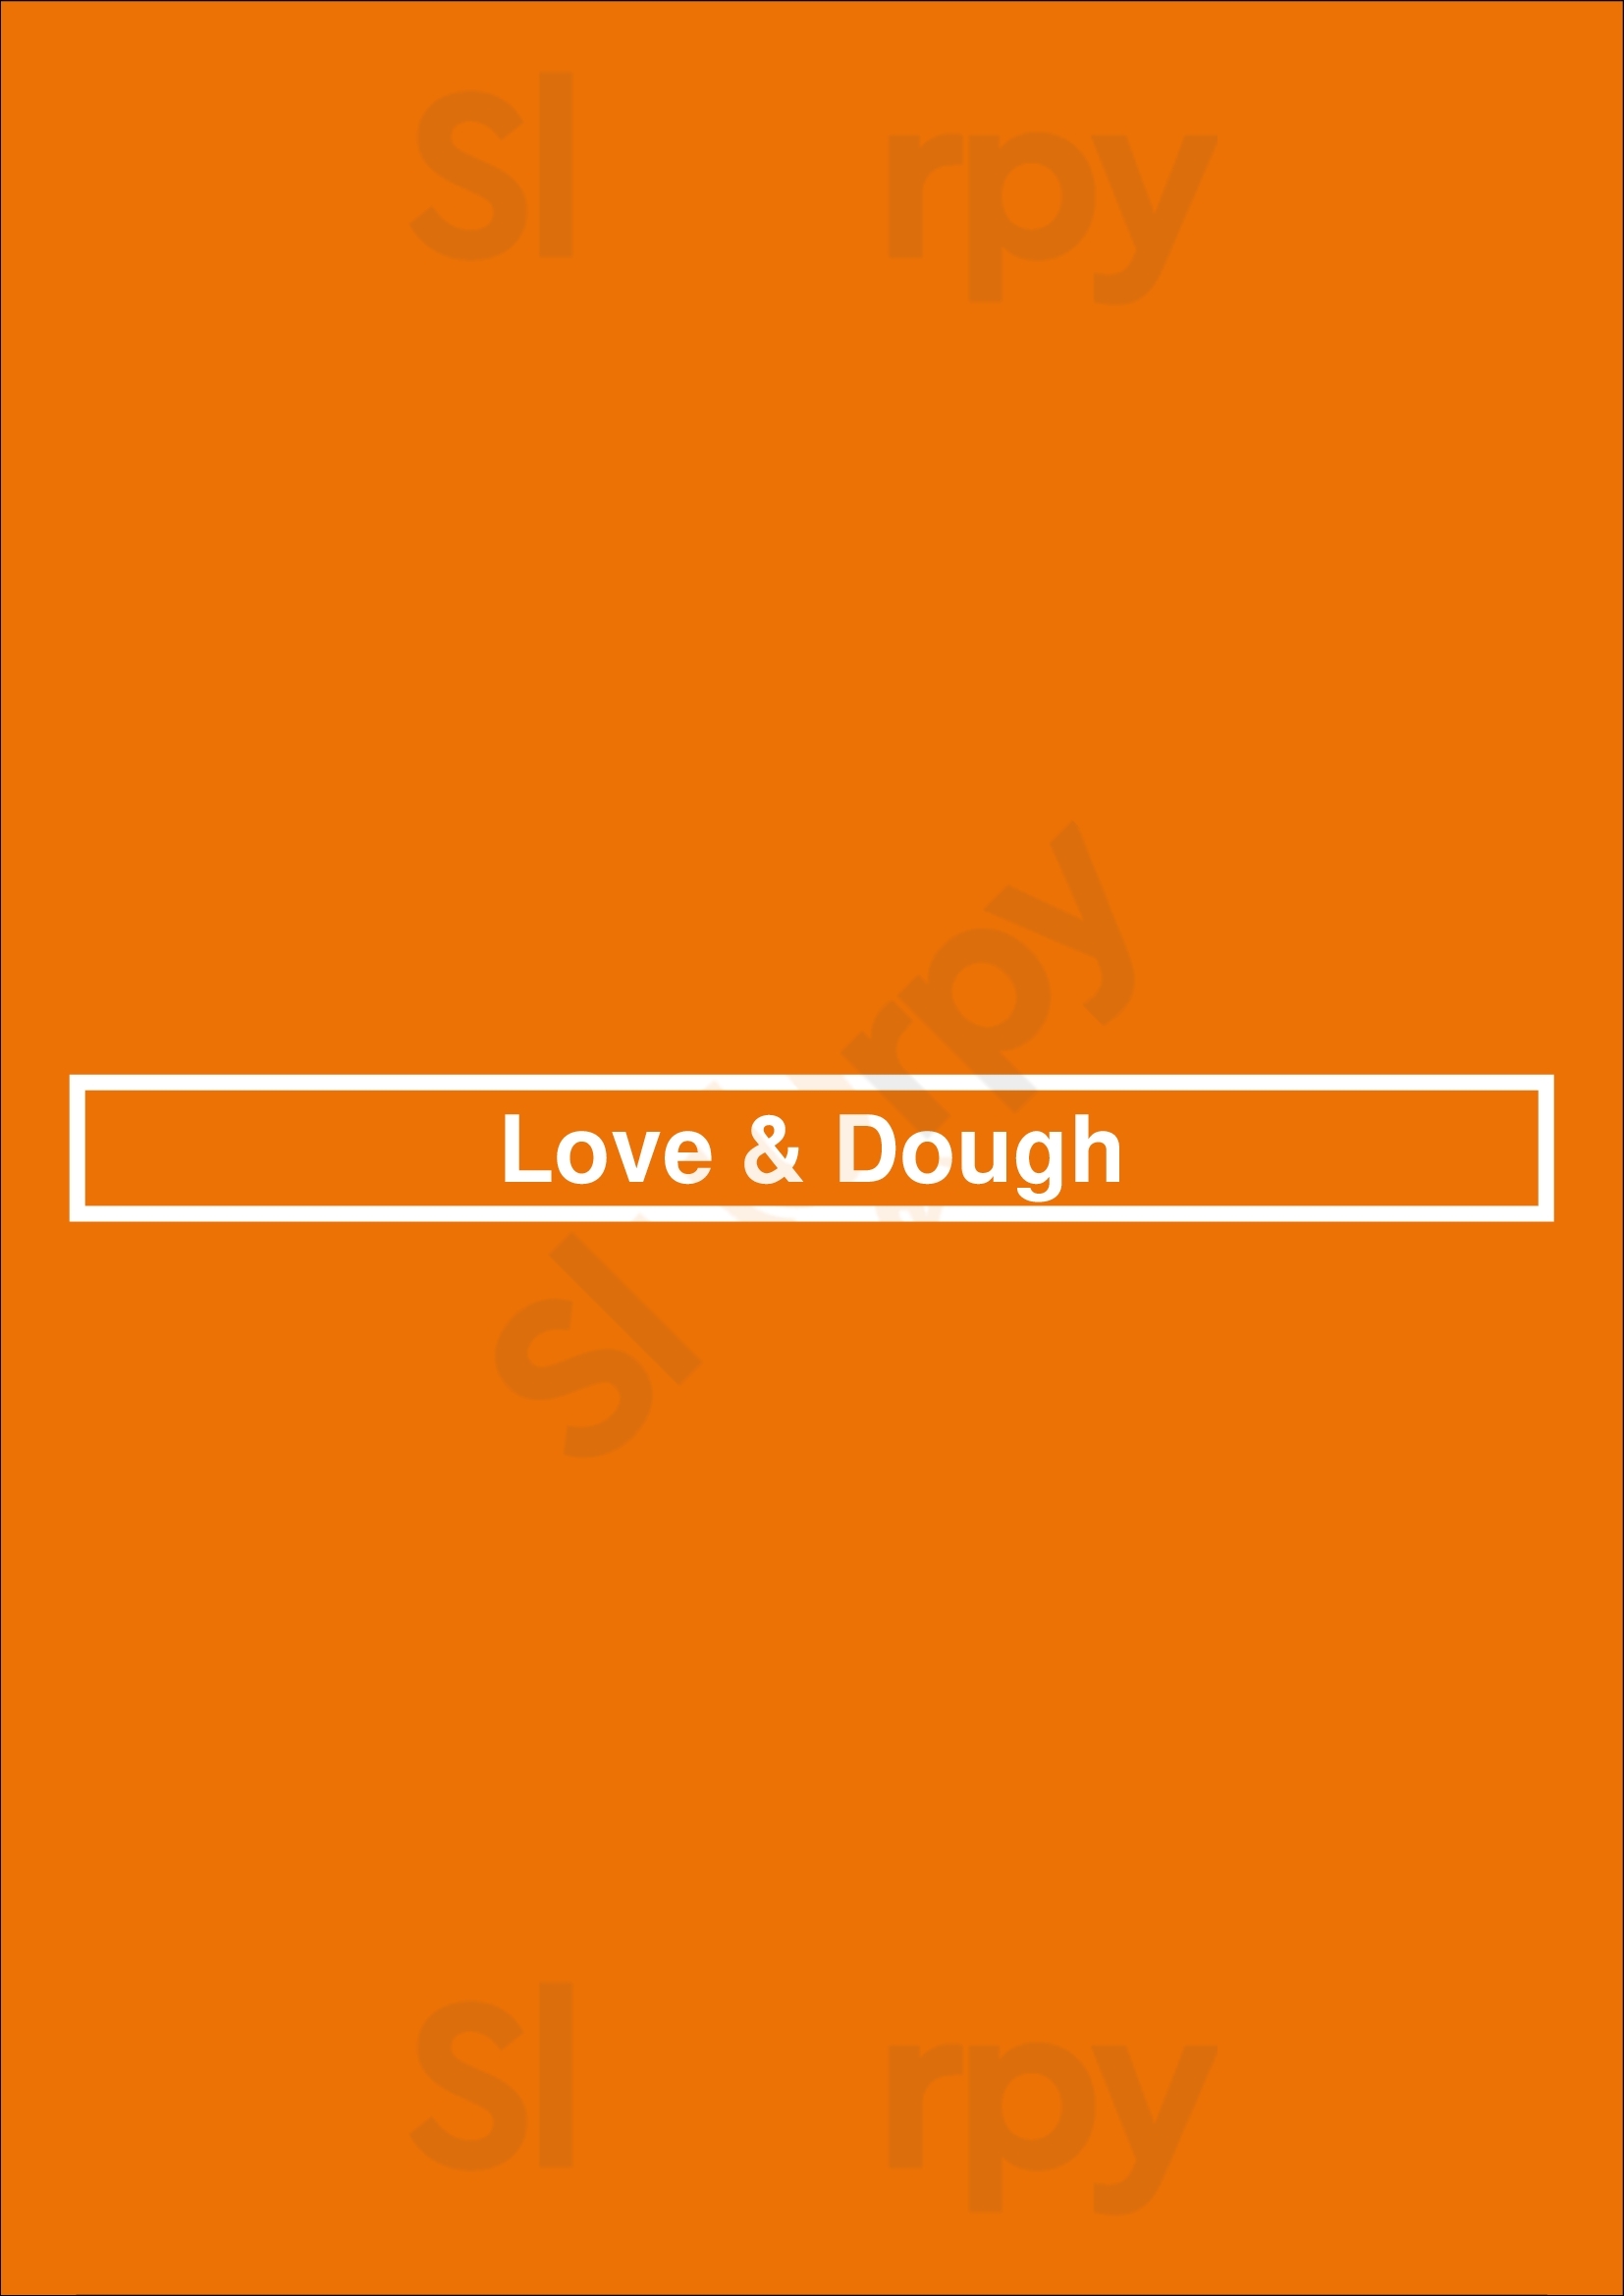 Love & Dough Brooklyn Menu - 1